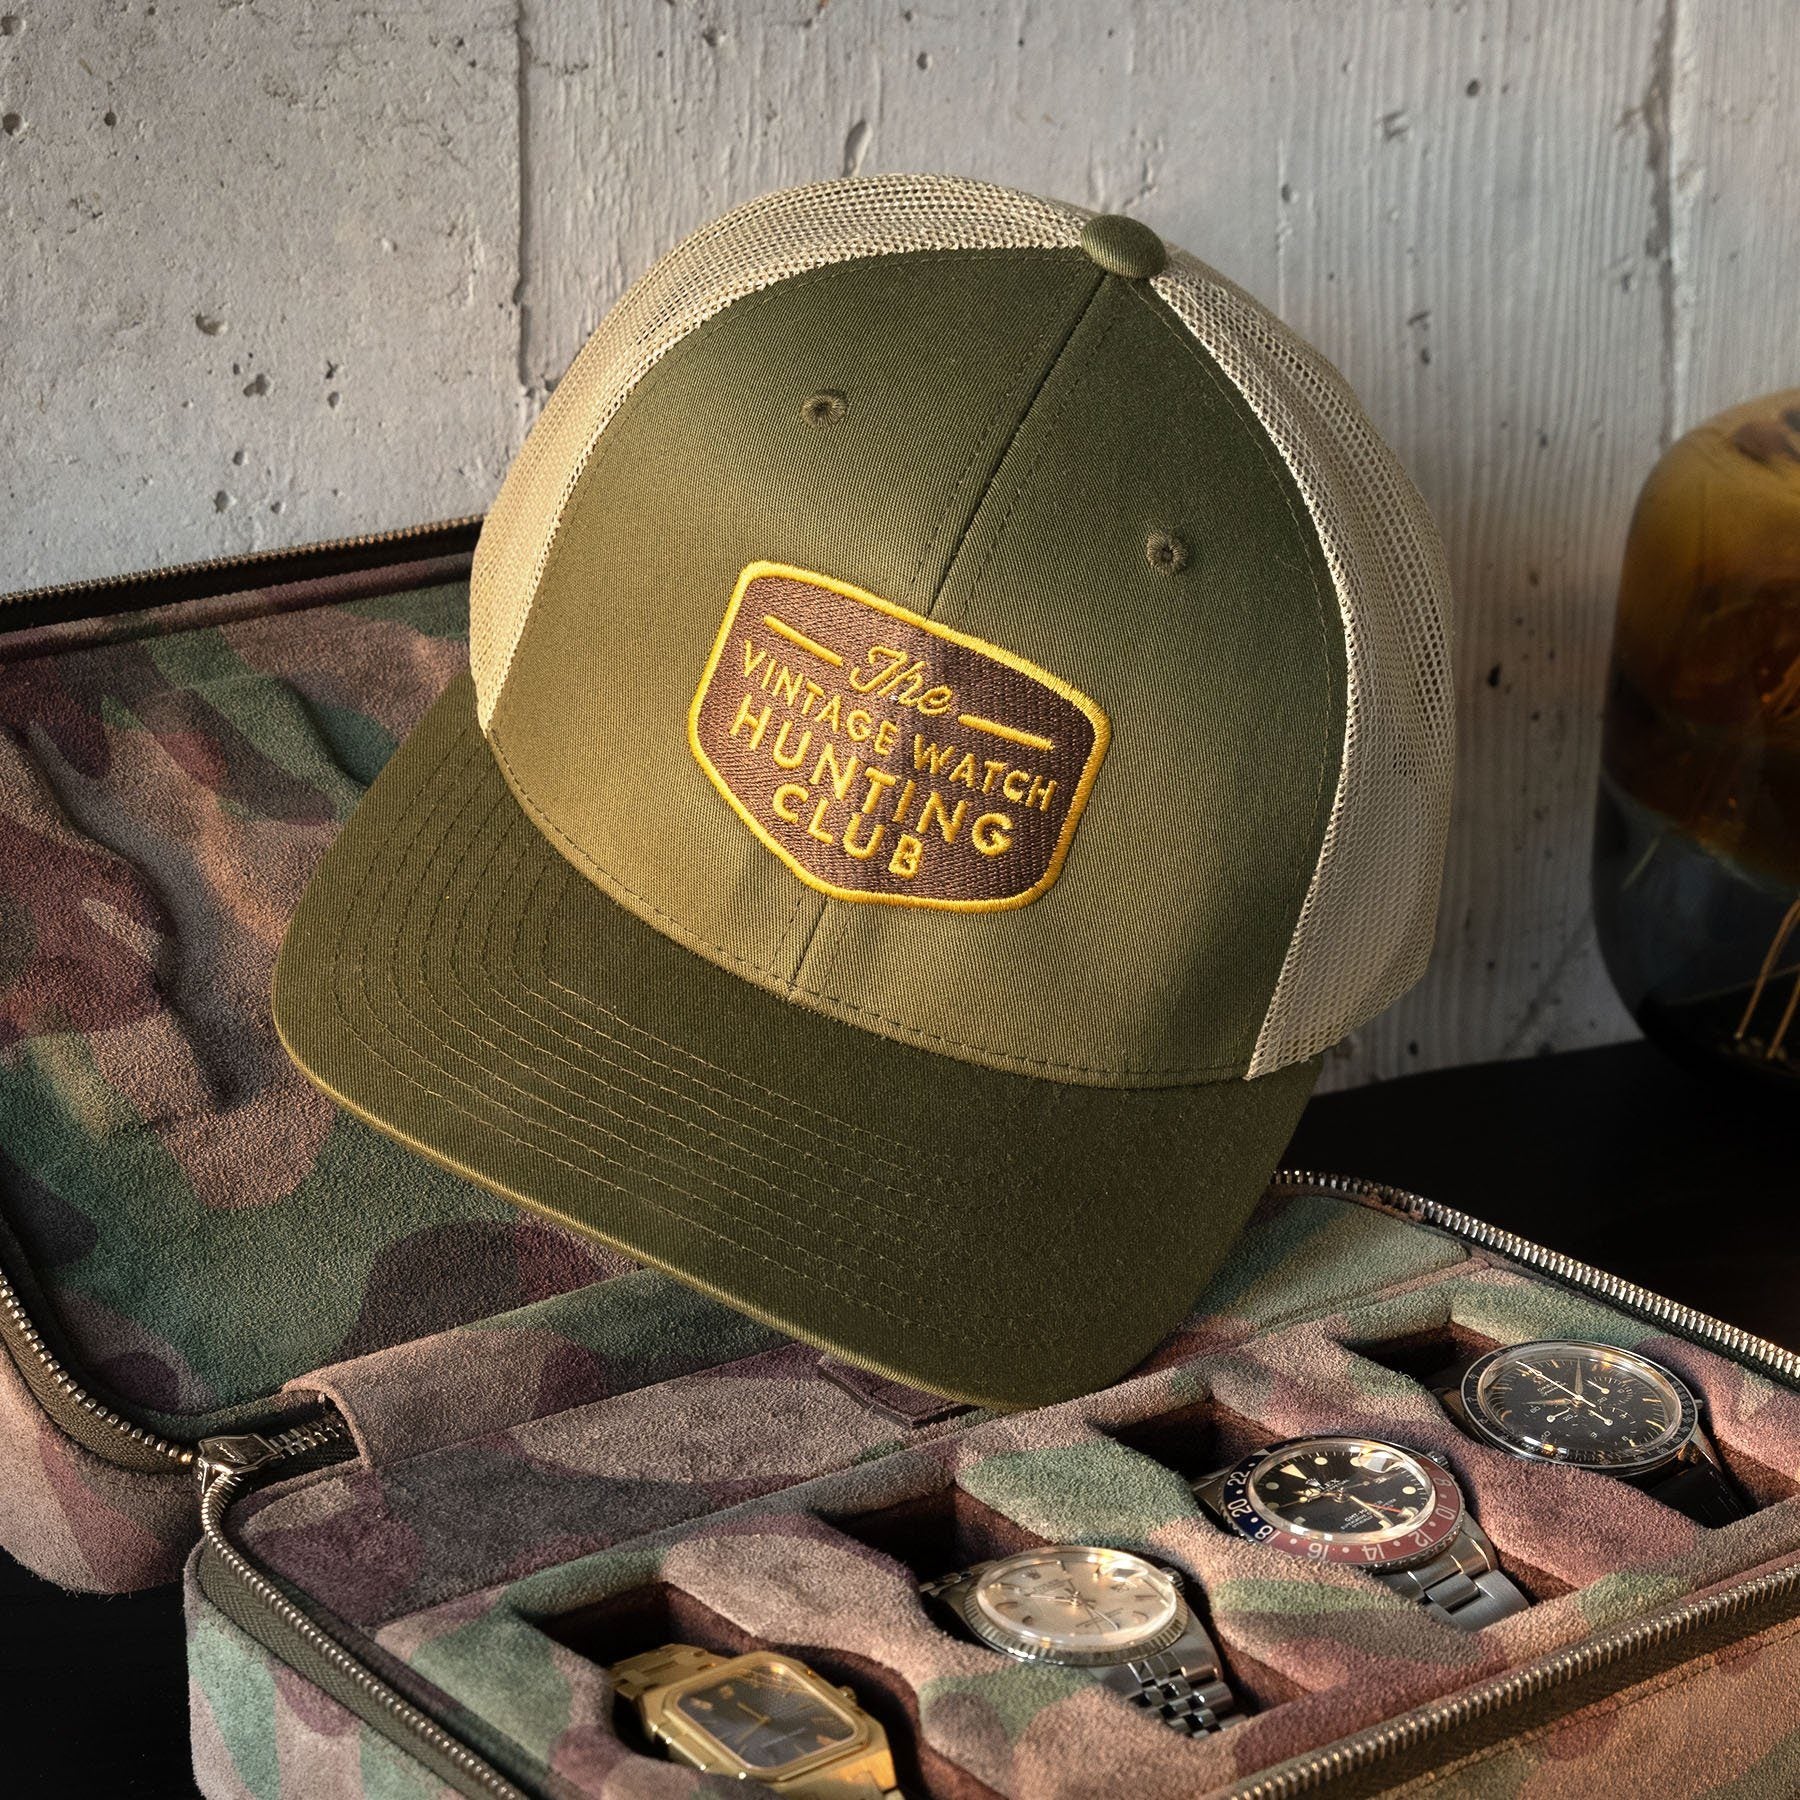 The Vintage Watch Hunting Club Green Ballcap